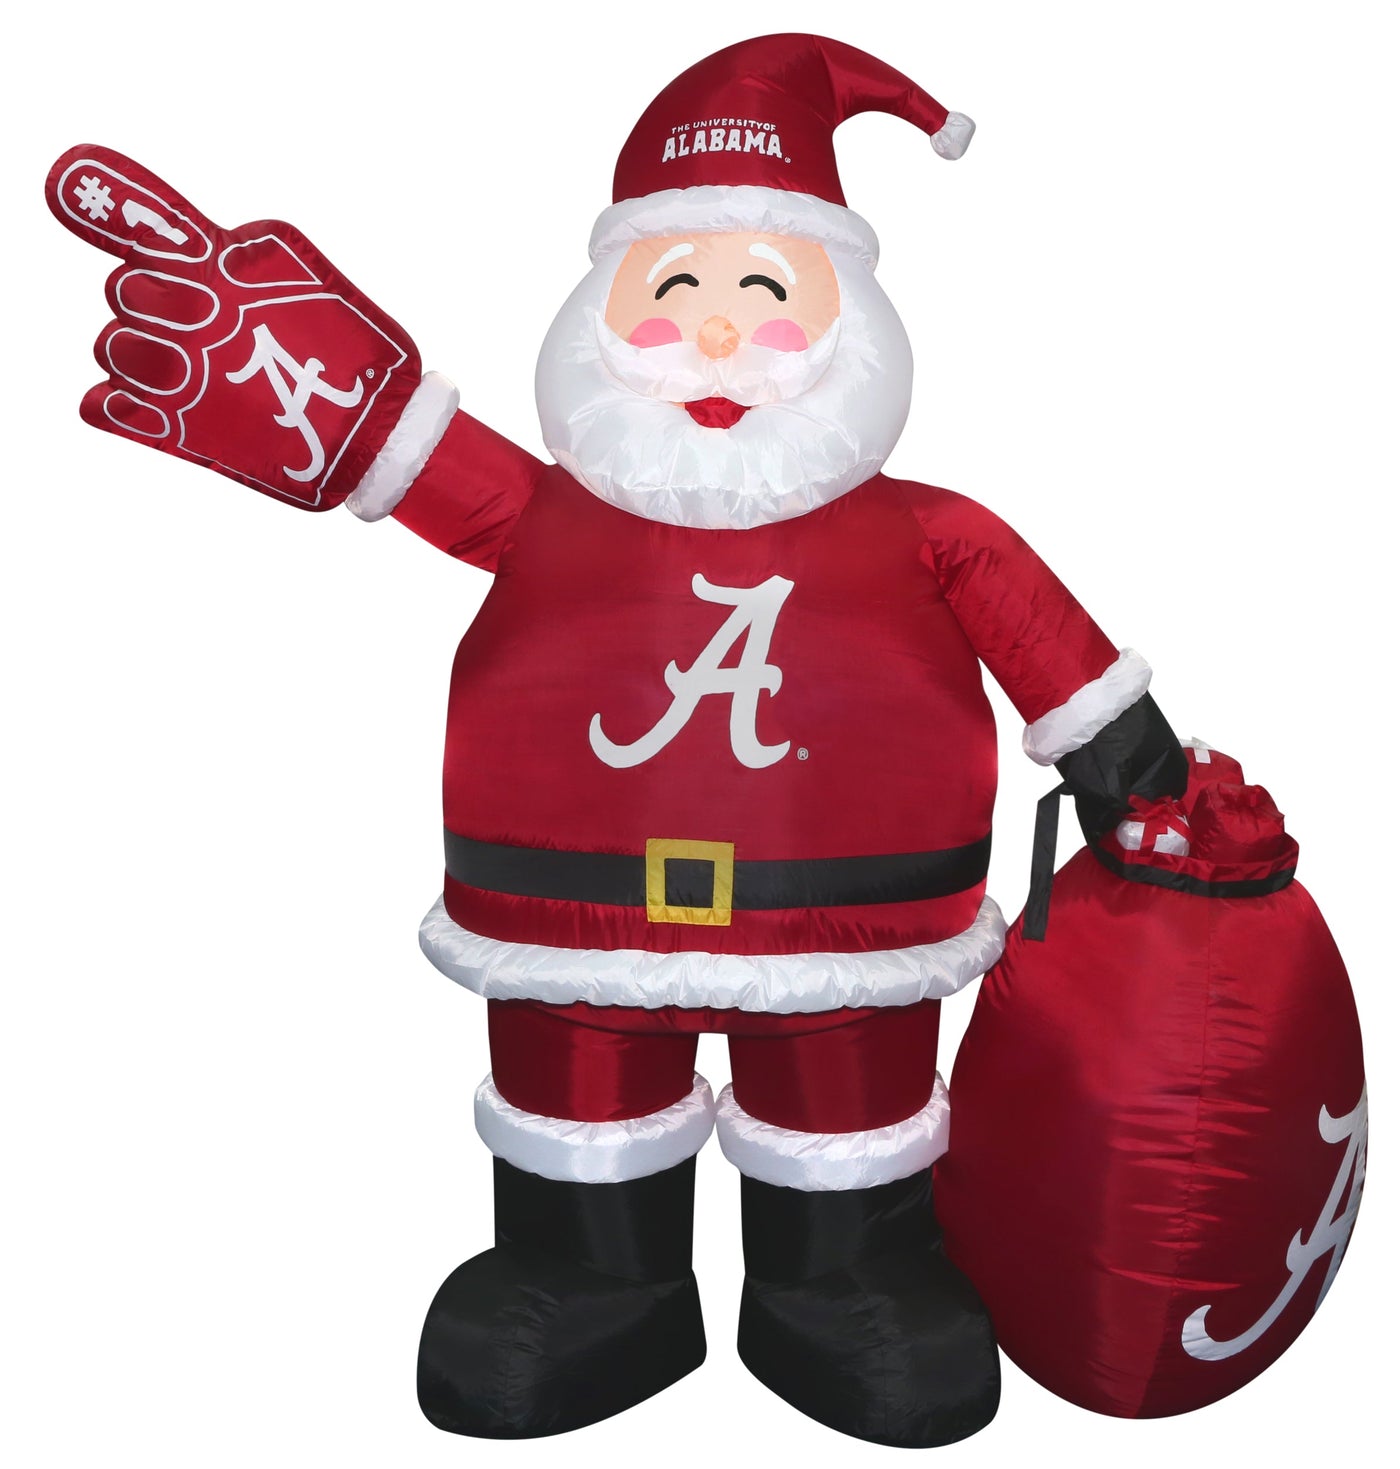 Alabama Santa Claus Yard Inflatable